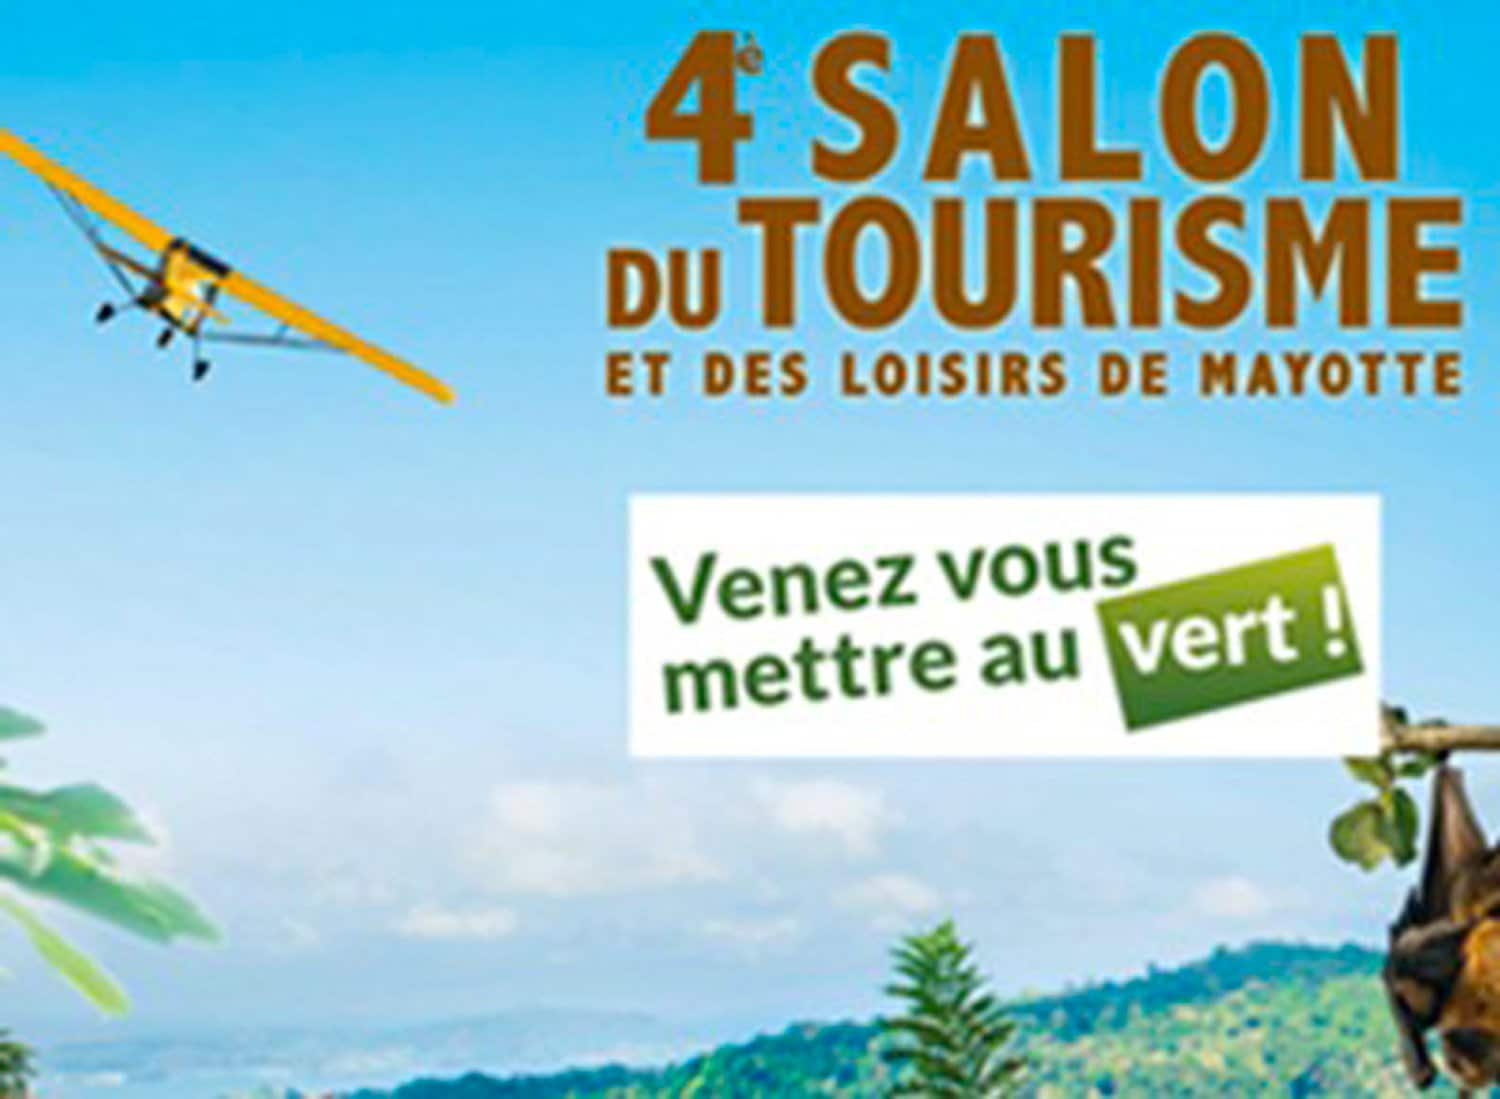 ARTICLE-Mayotte leisure & tourism fair